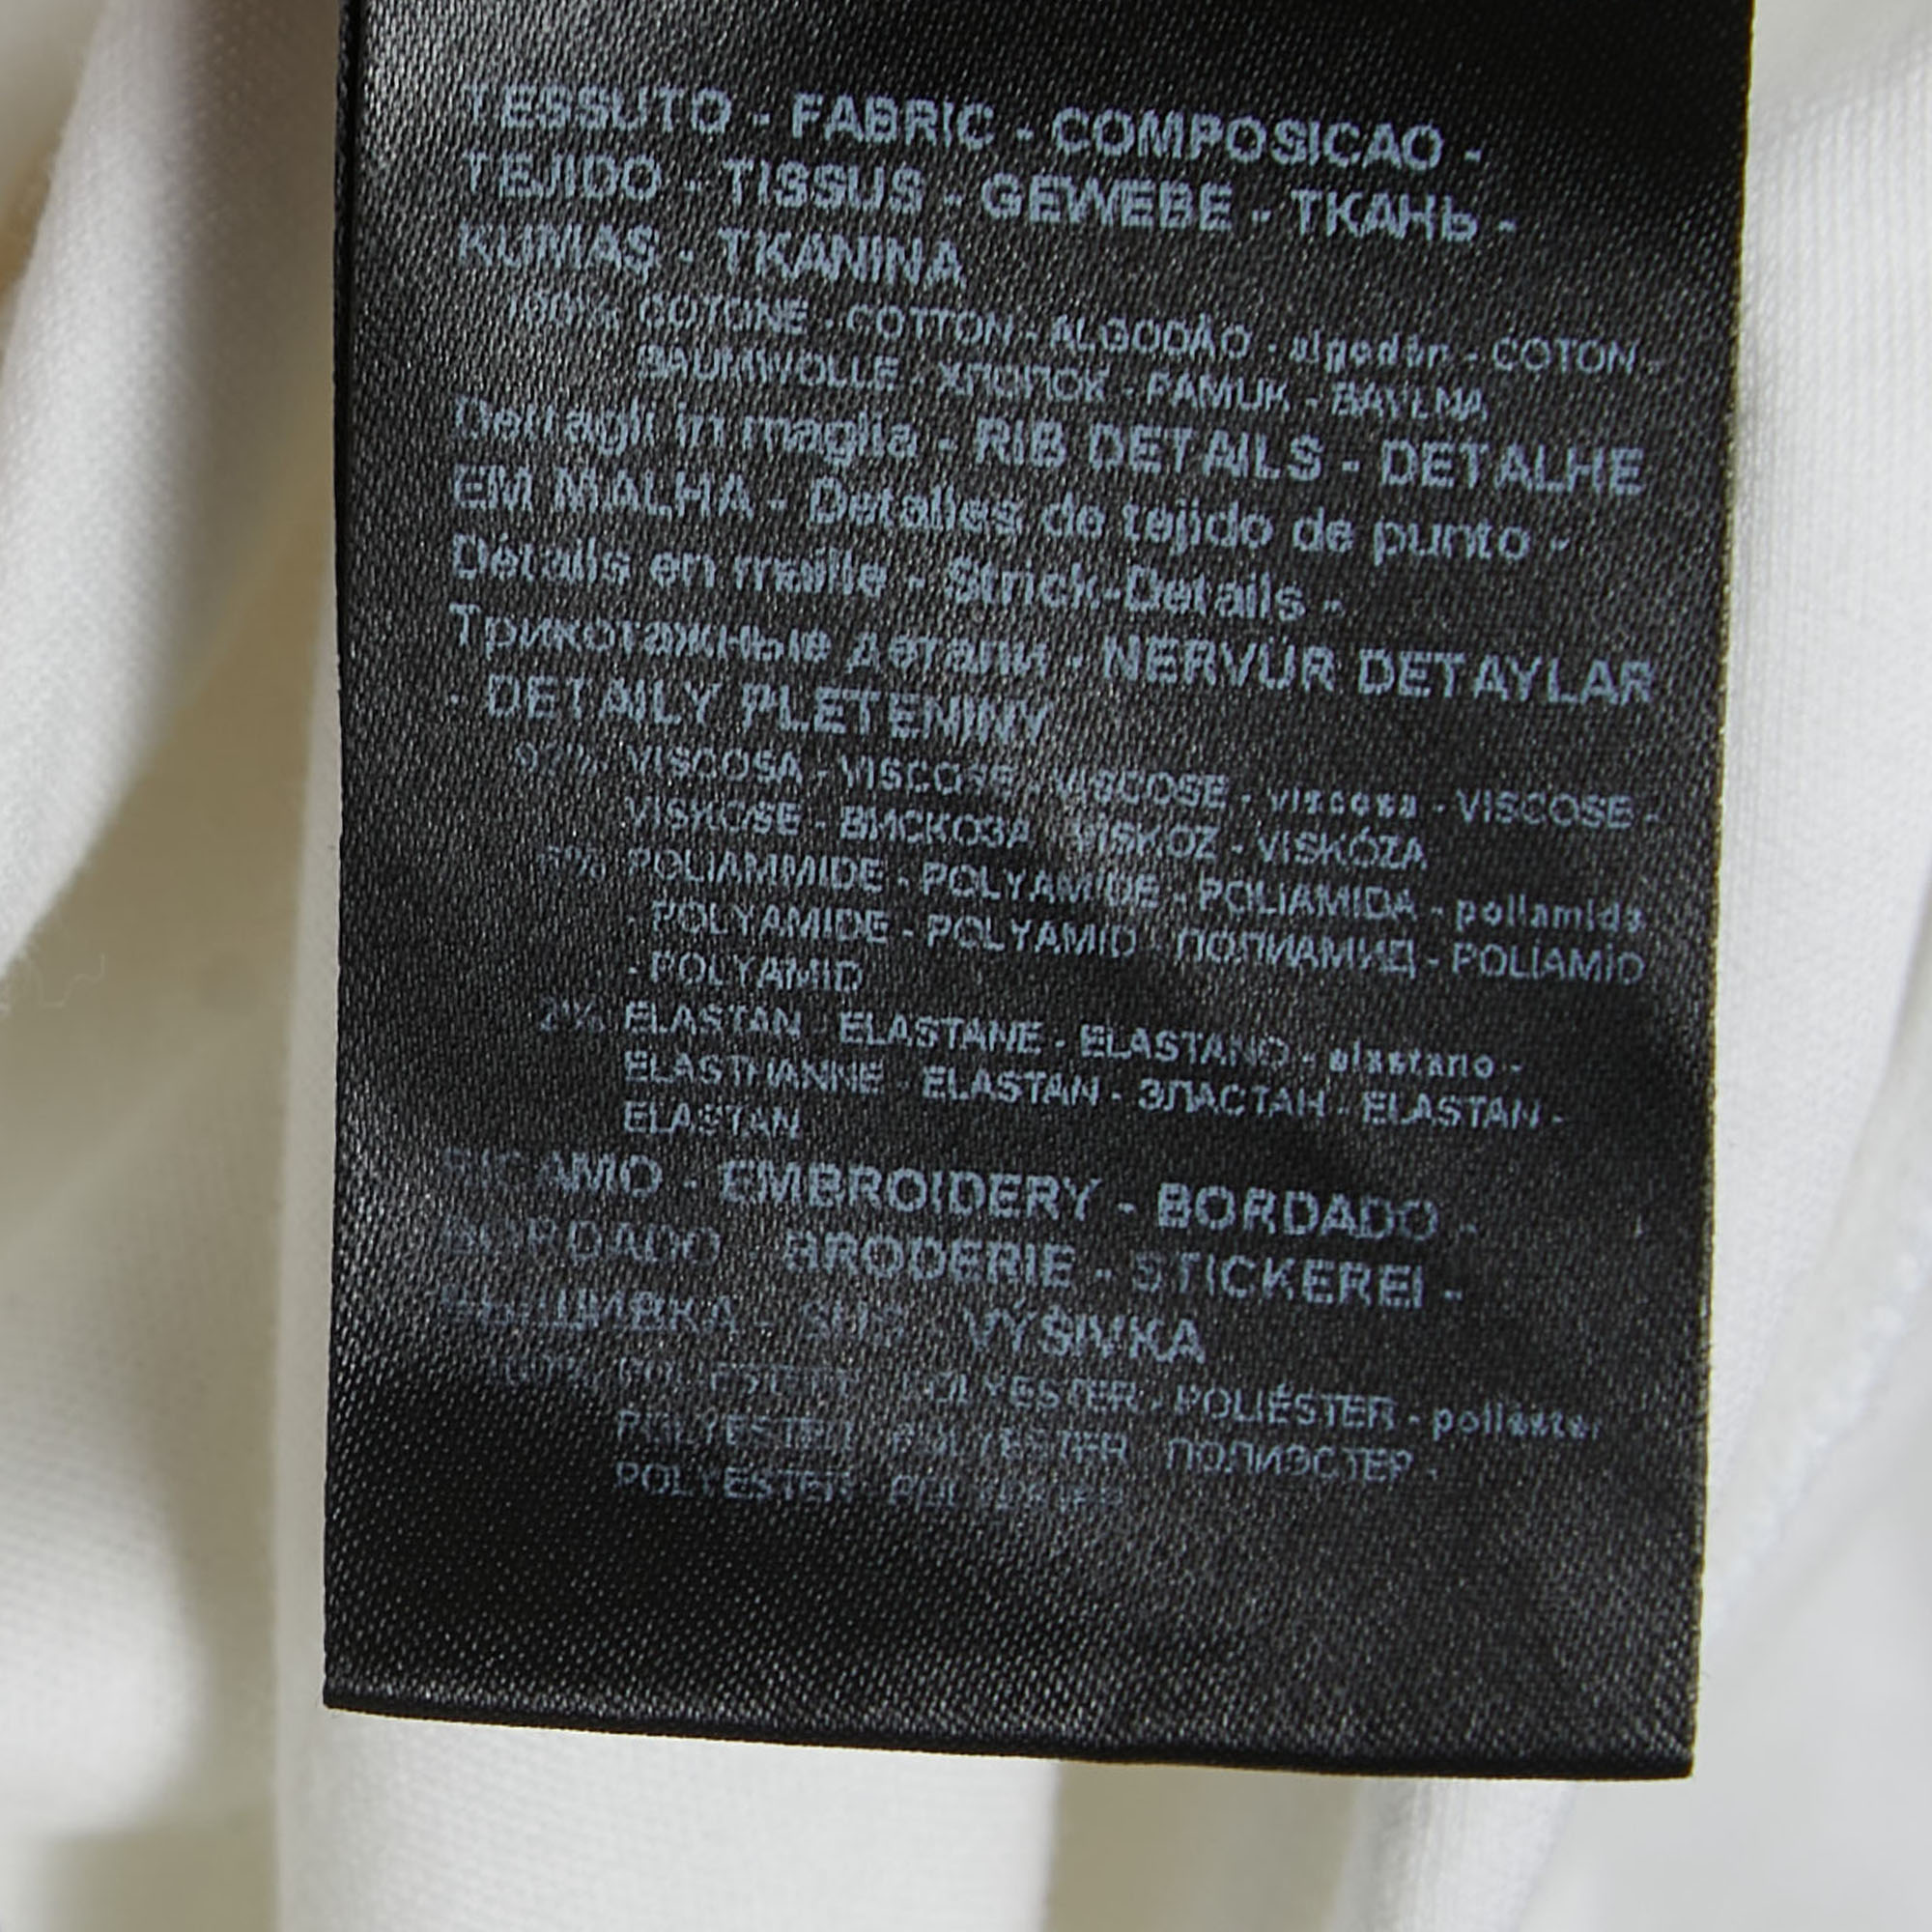 Giorgio Armani White Cotton Signature Logo Embroidered T-Shirt 3XL